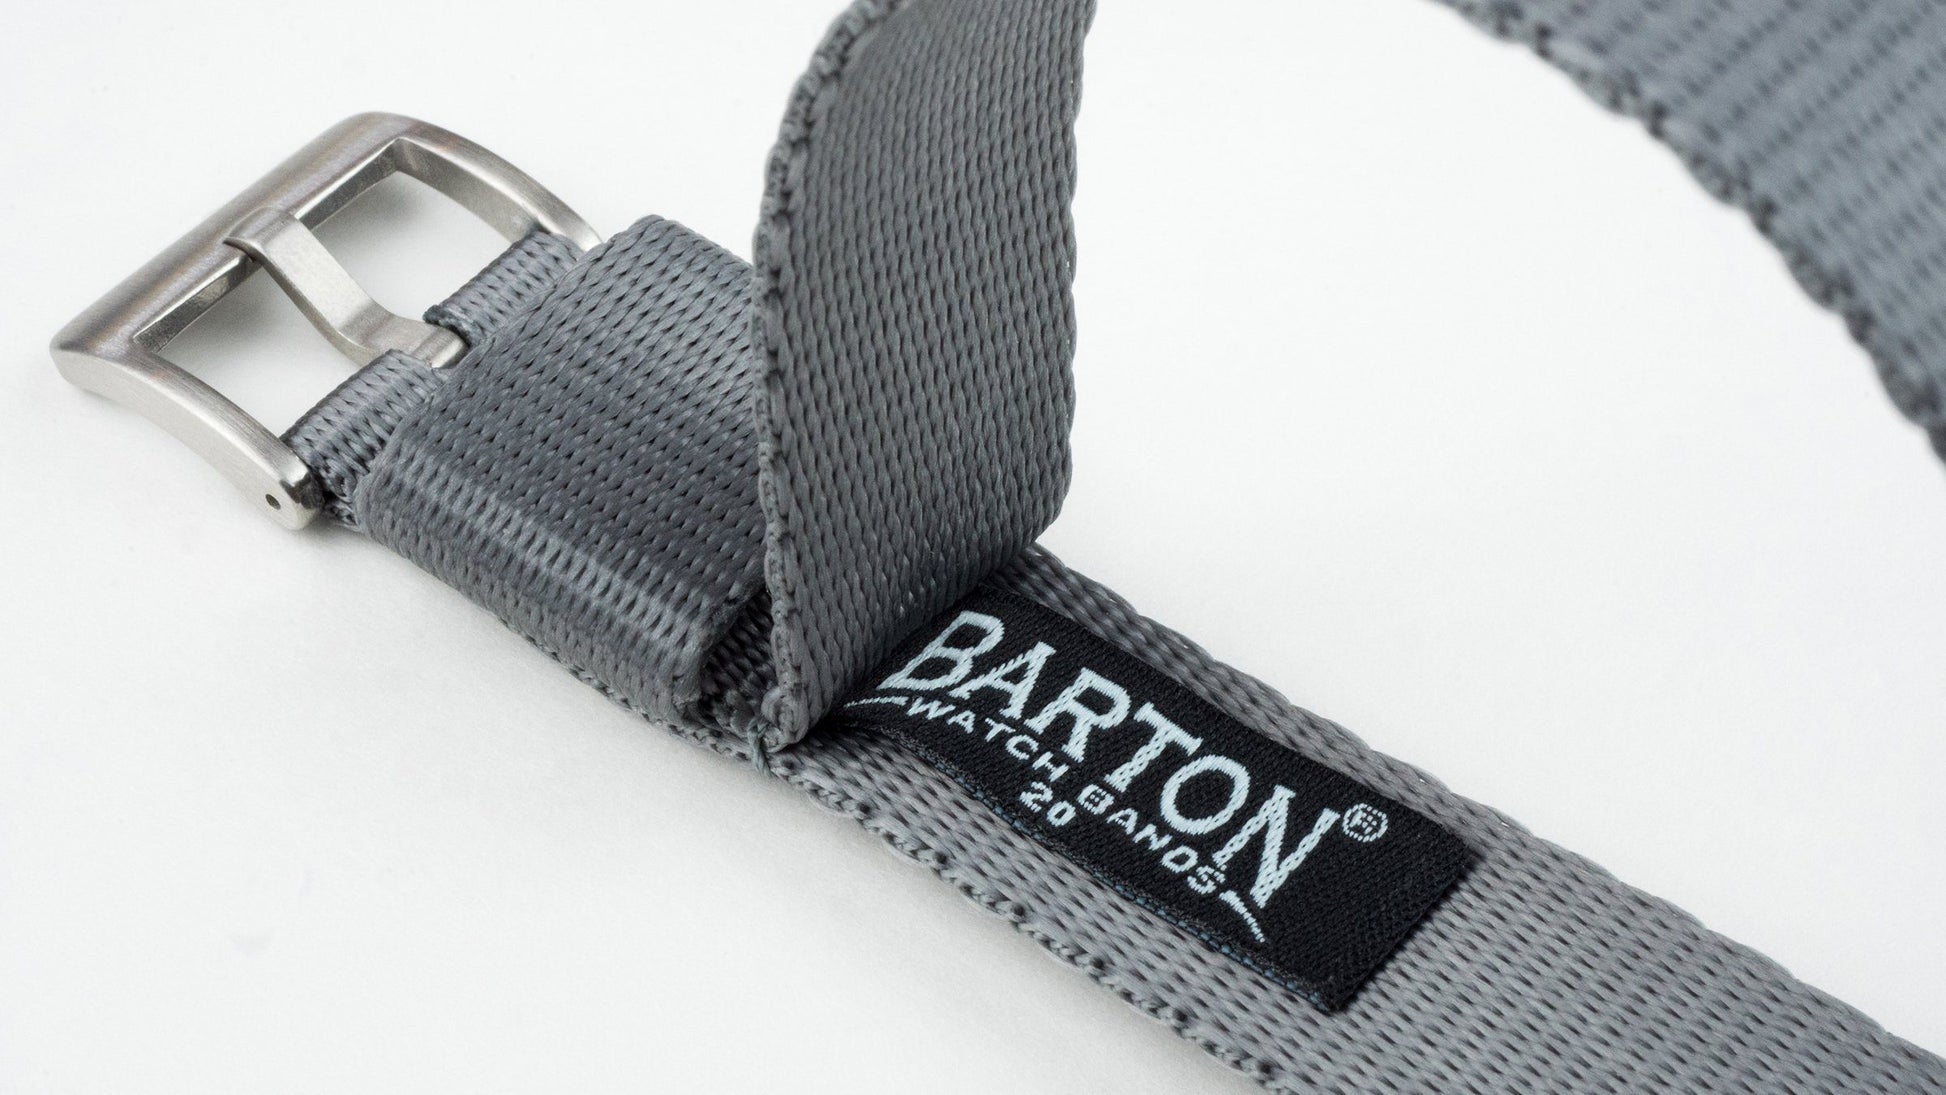 Steel Grey | Elite Nylon NATO Style - Barton Watch Bands